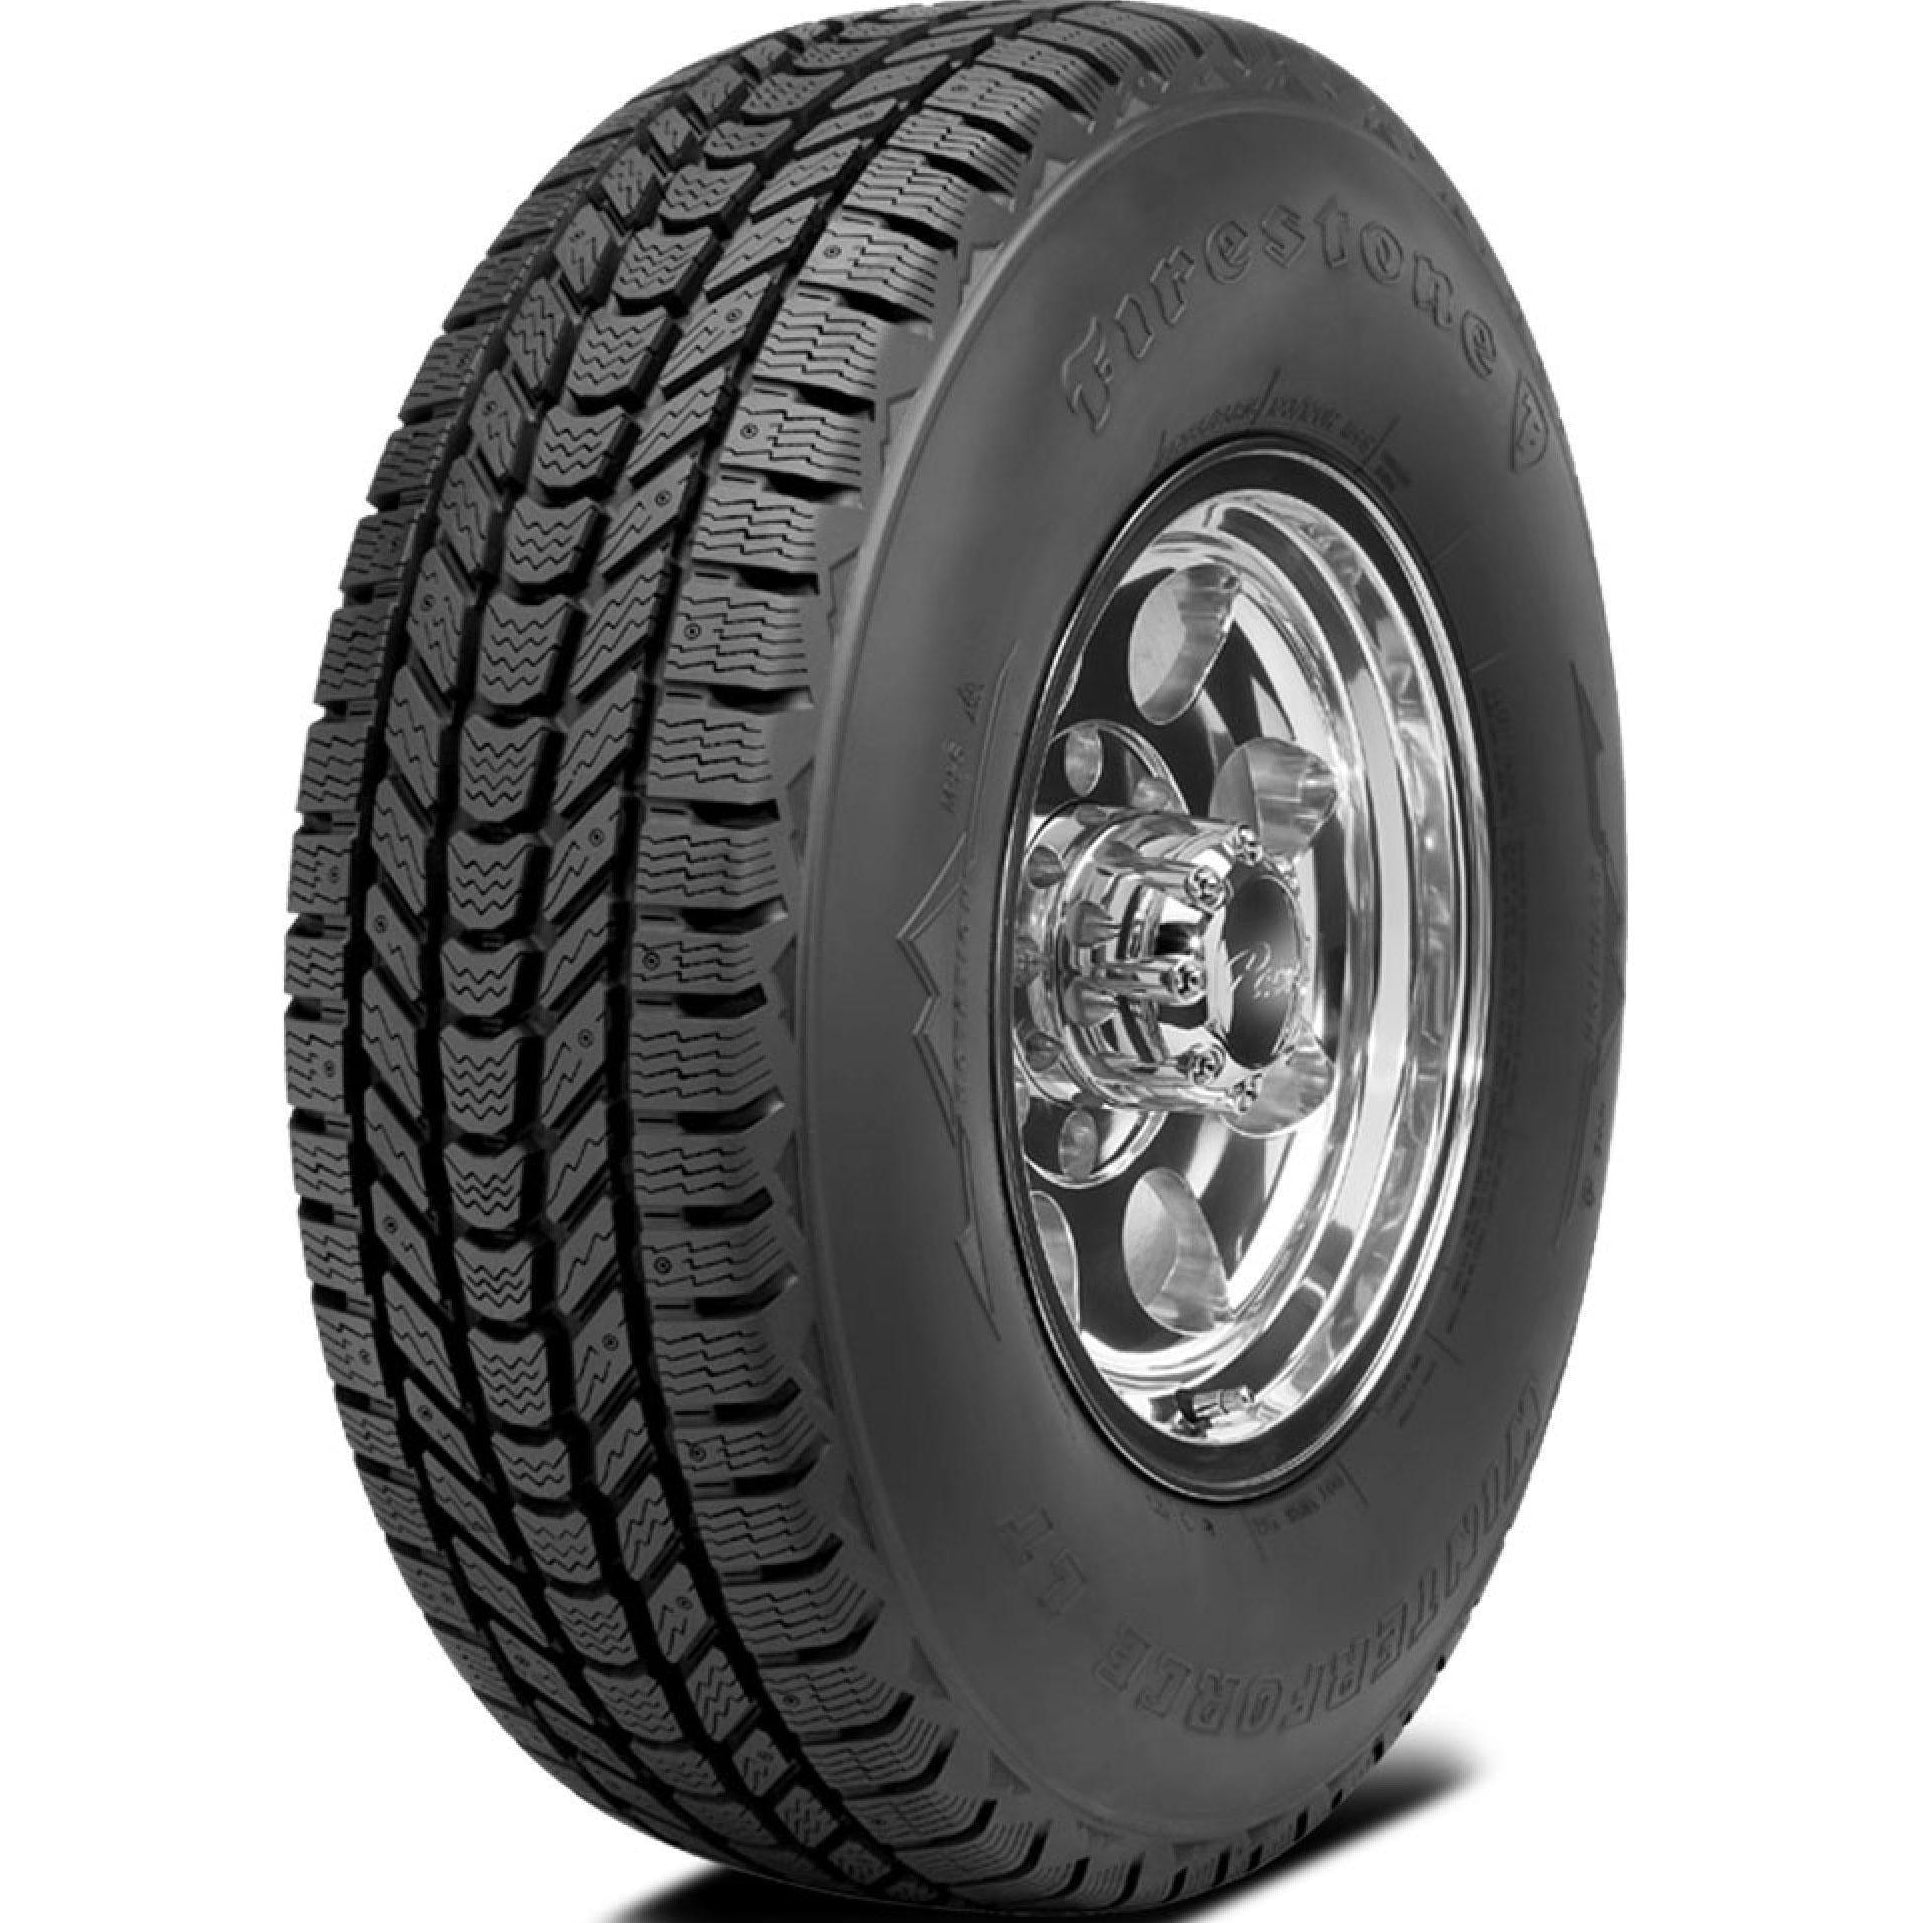 FIRESTONE WINTERFORCE LT 285/75R16 (32.8X11.2R 16) Tires